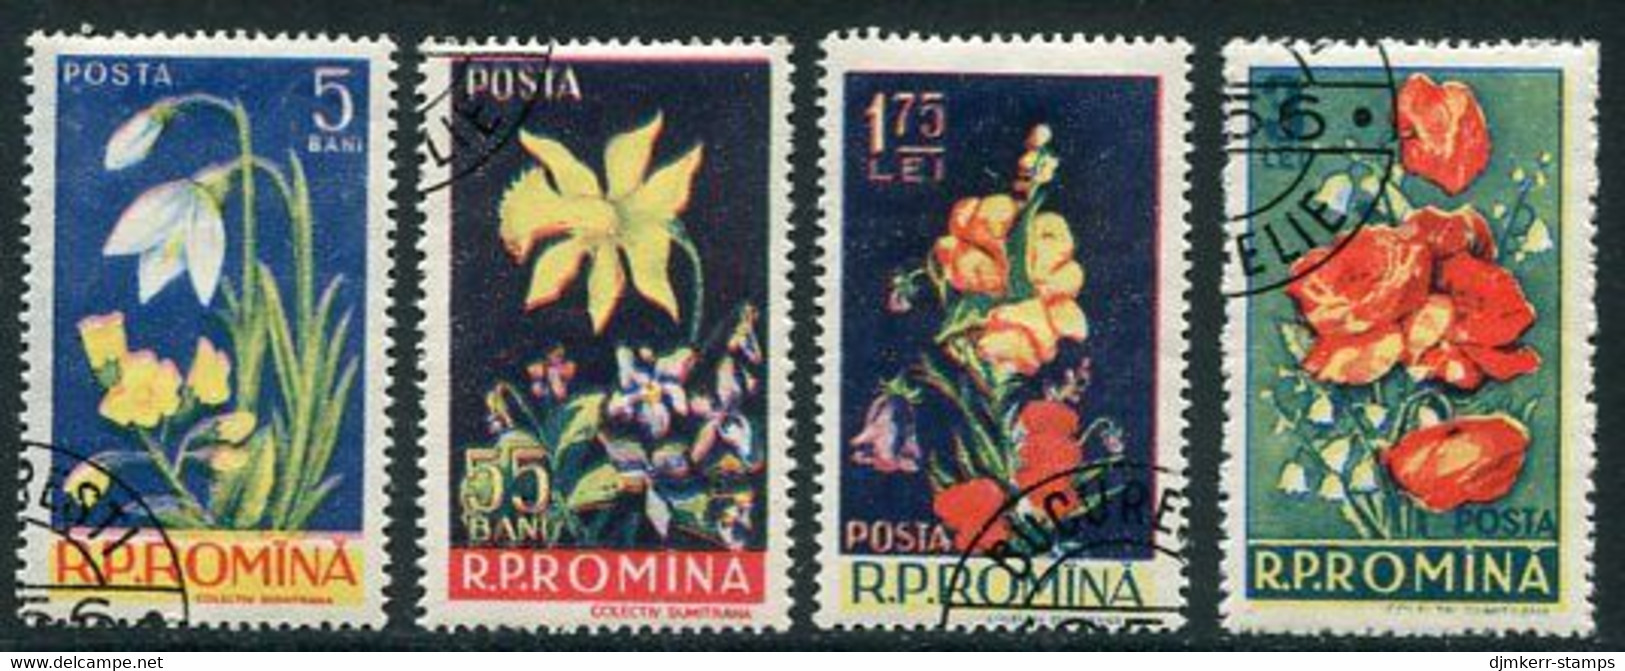 ROMANIA 1956 Flowers Used.  Michel 1589-92 - Usado